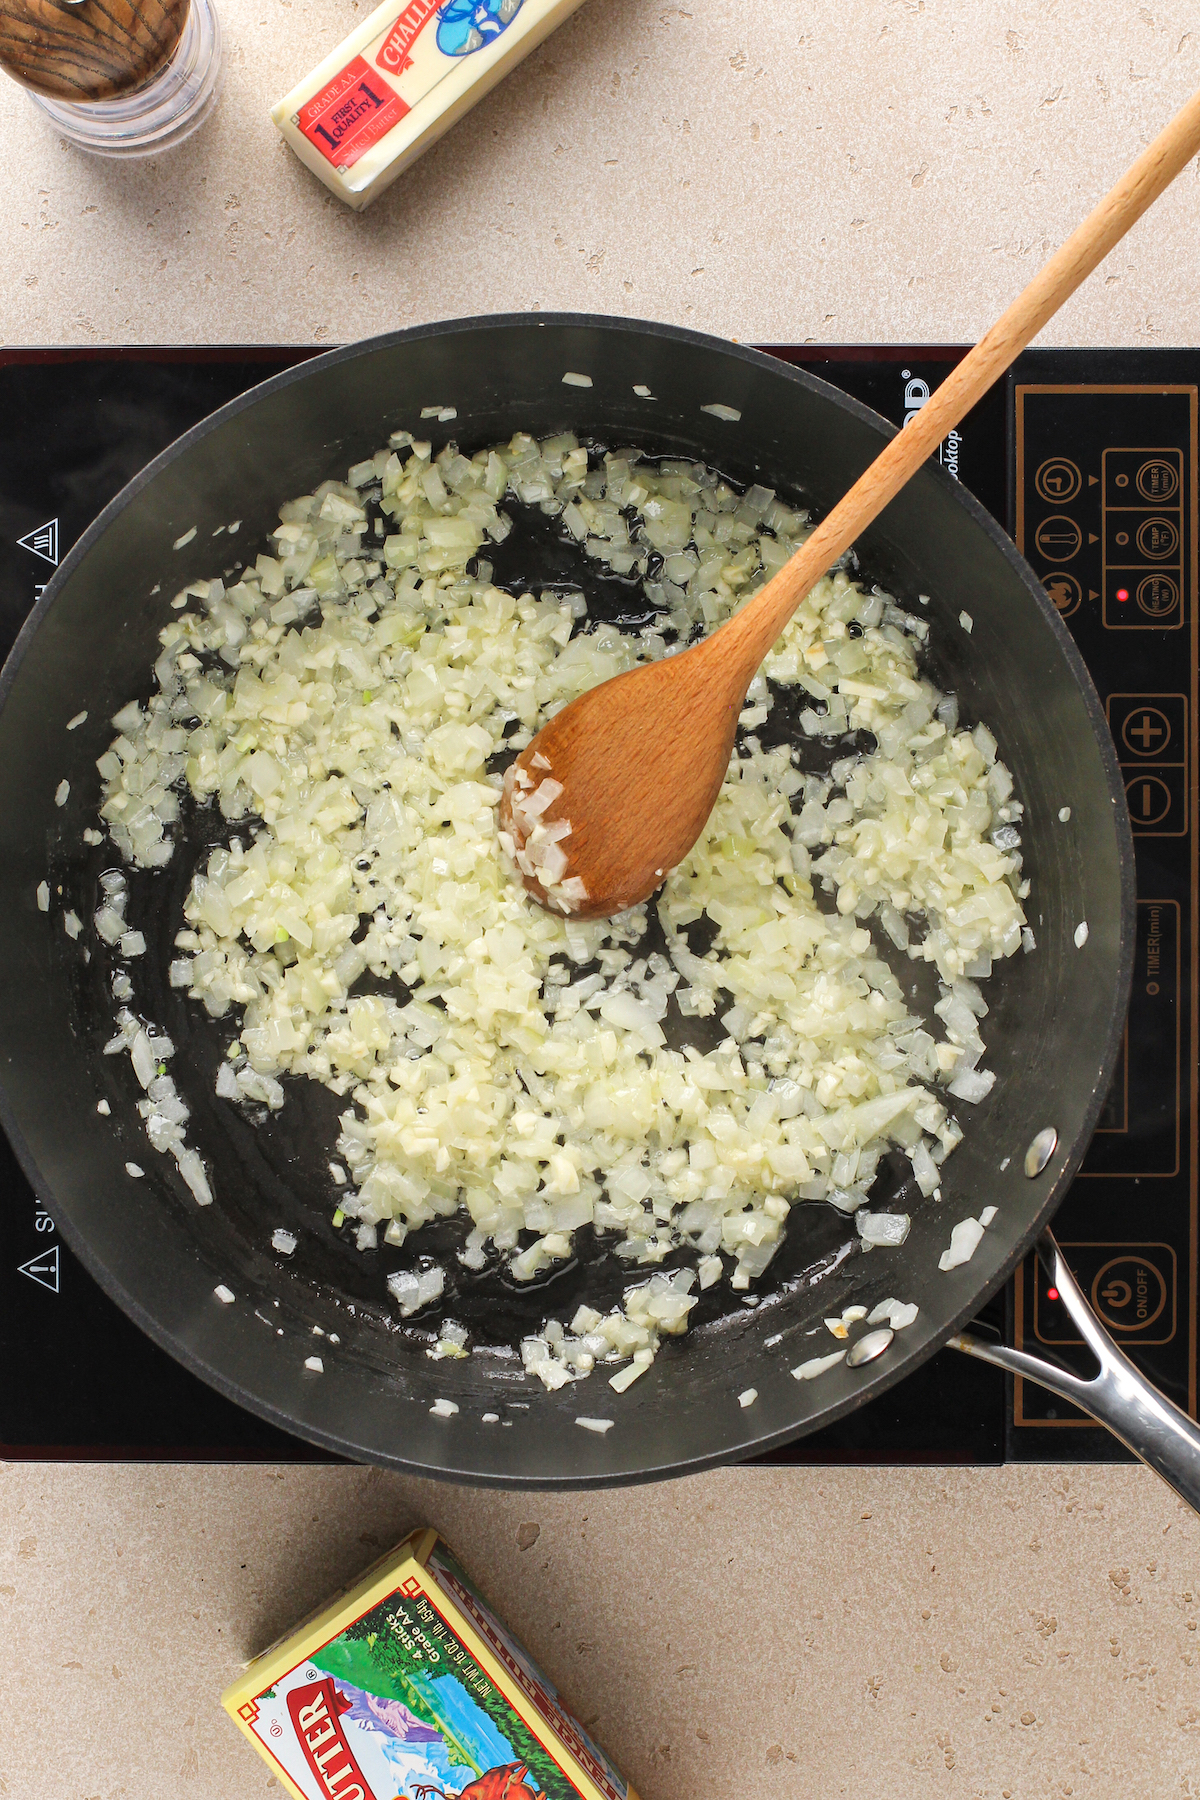 Sautéed onion and garlic in a saute pan.